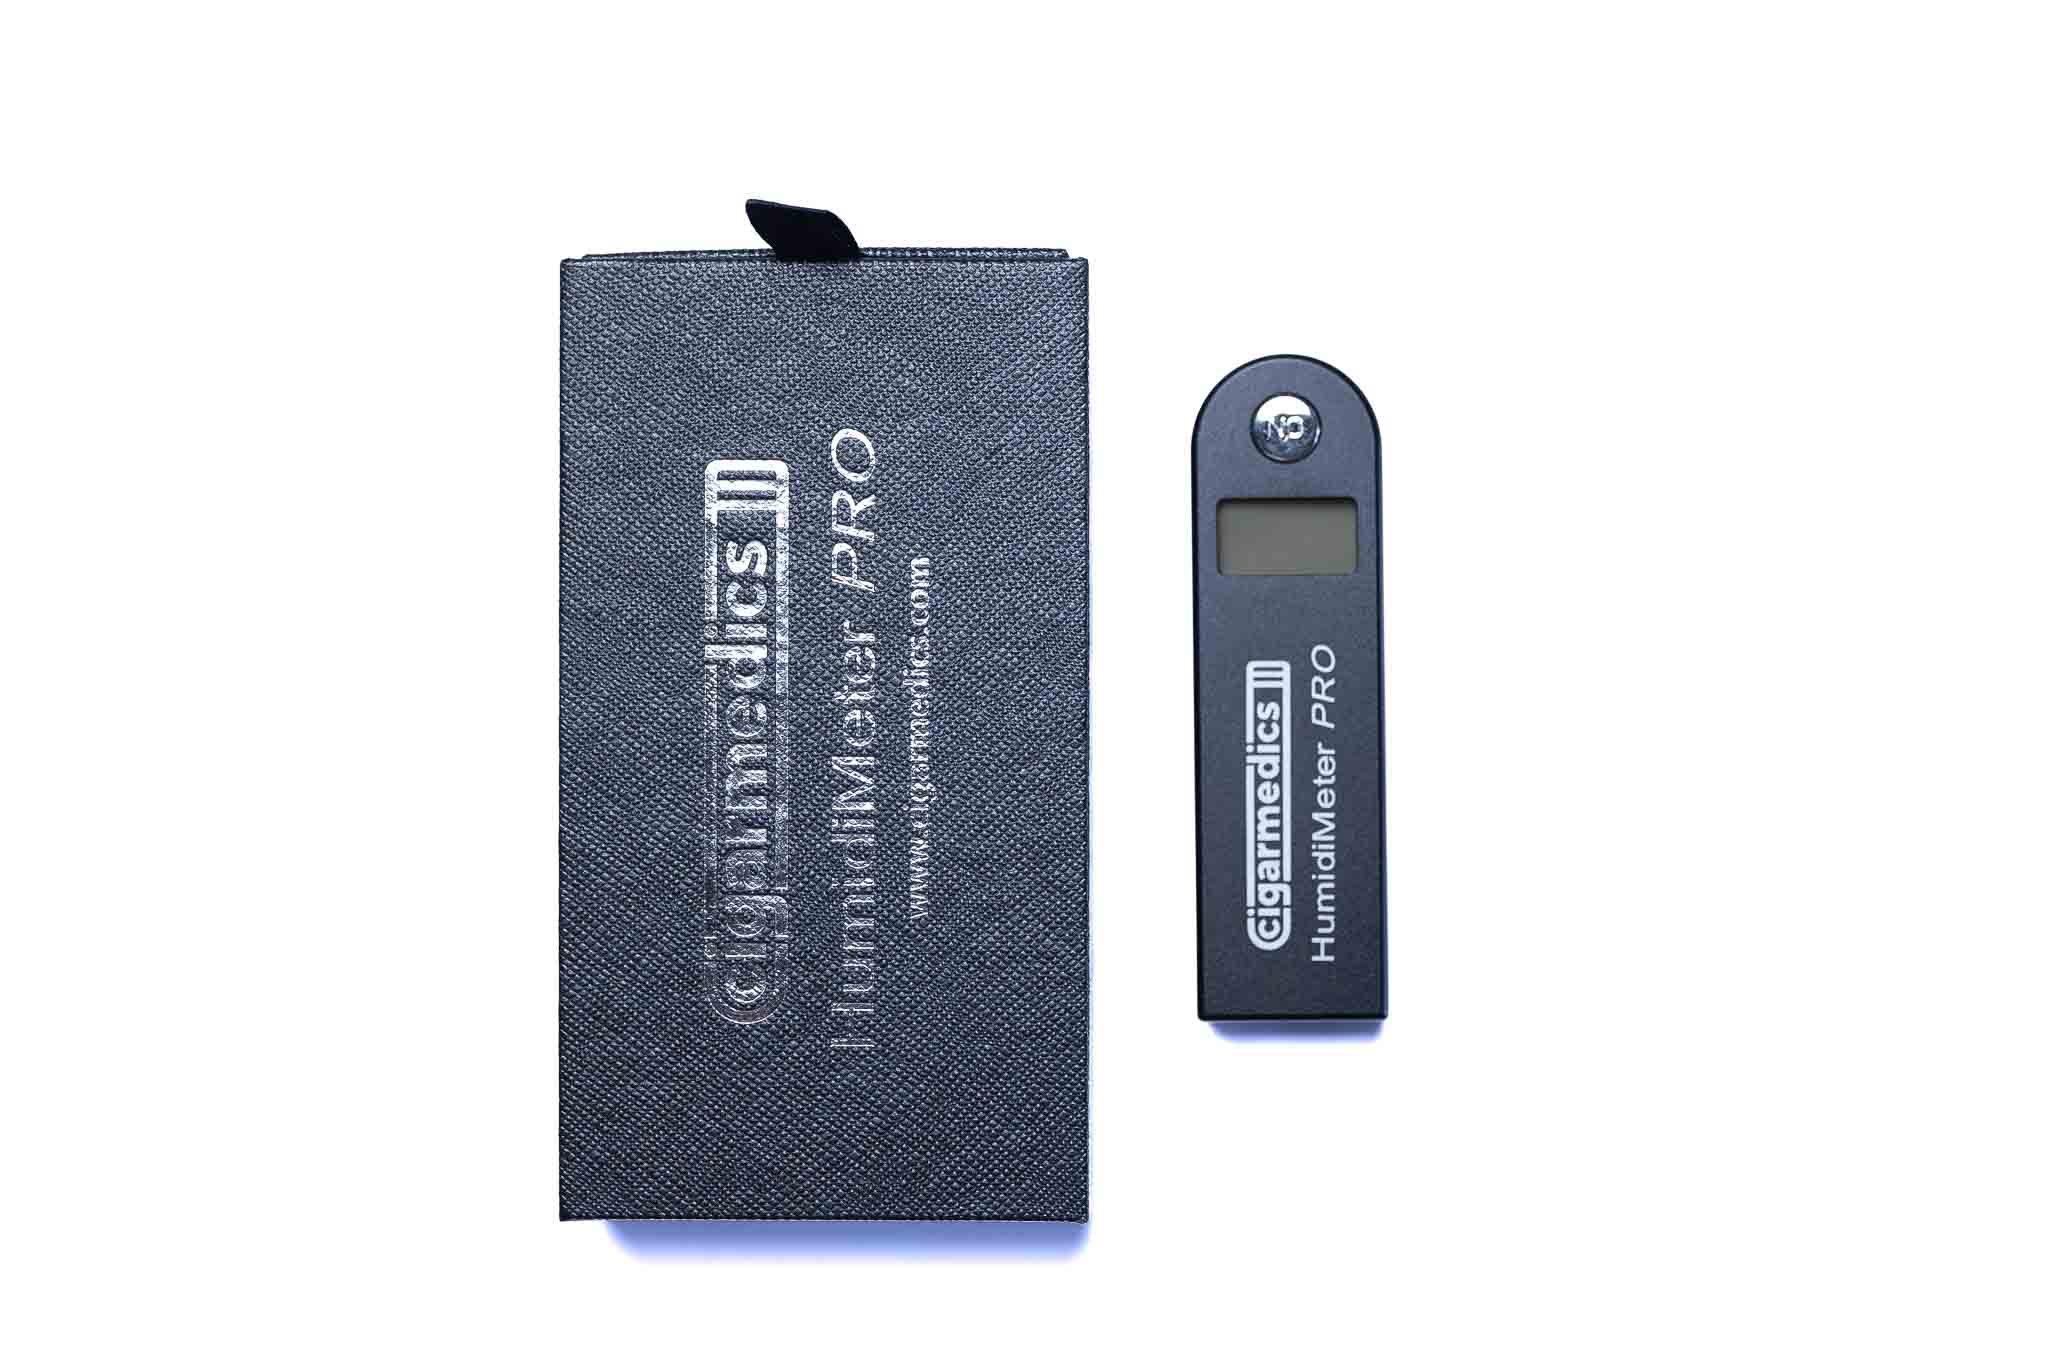 CigarMedics HumidiMeter Pro